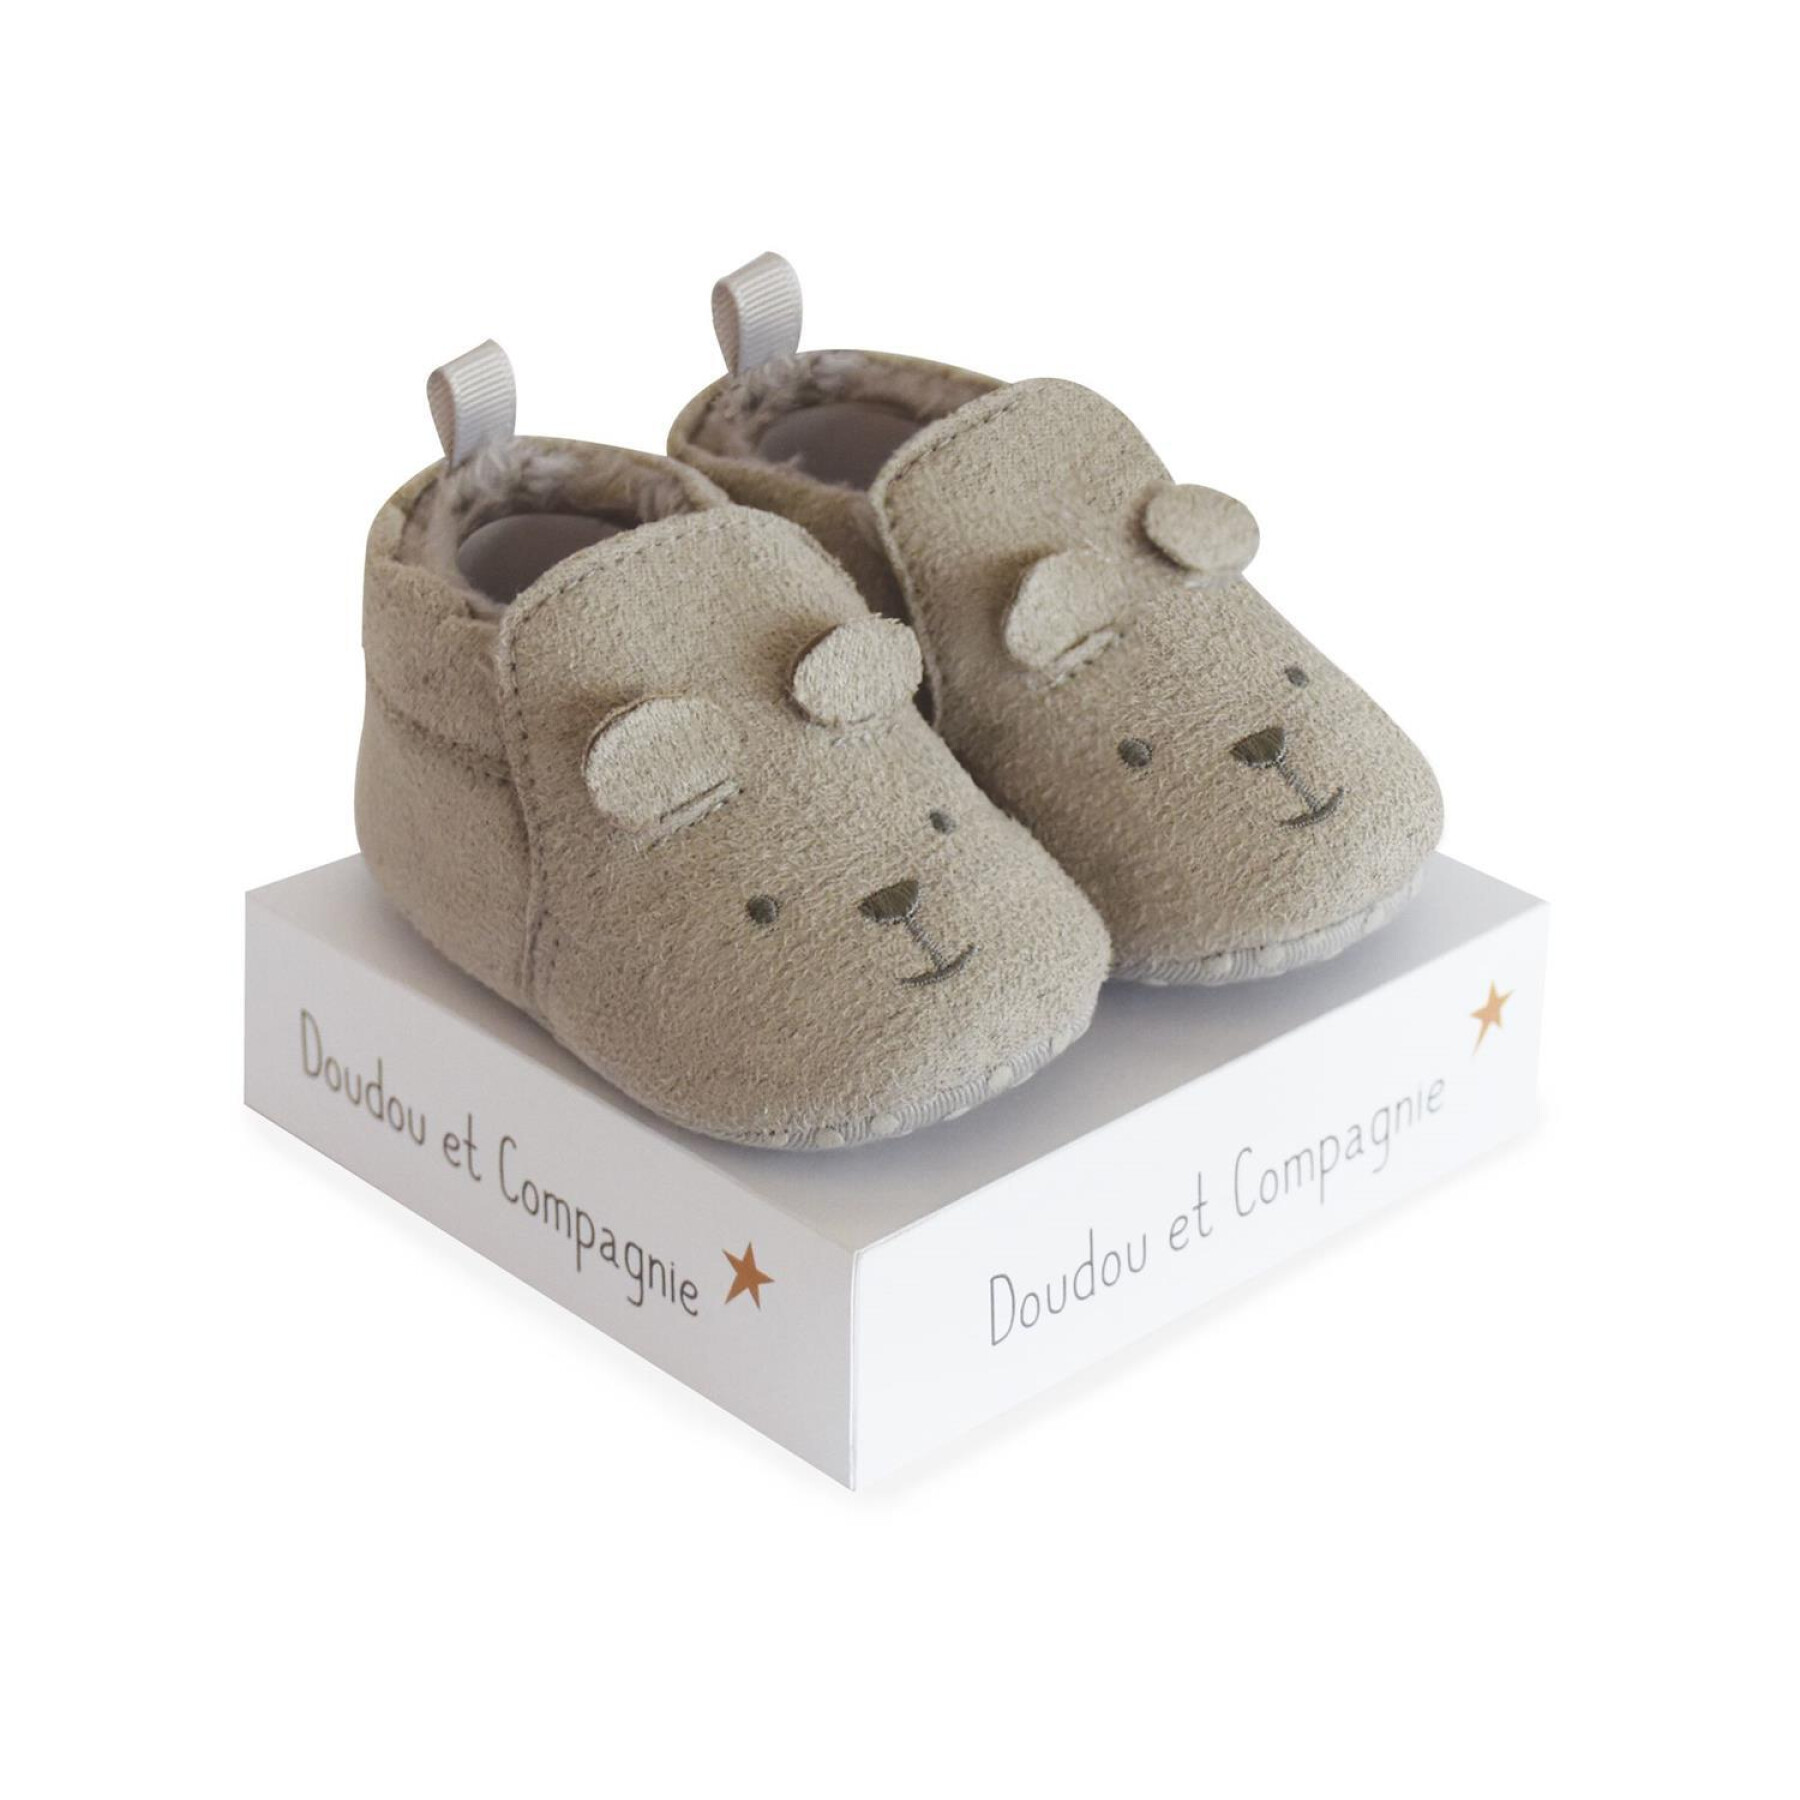 Pantofole per bambini Doudou & compagnie